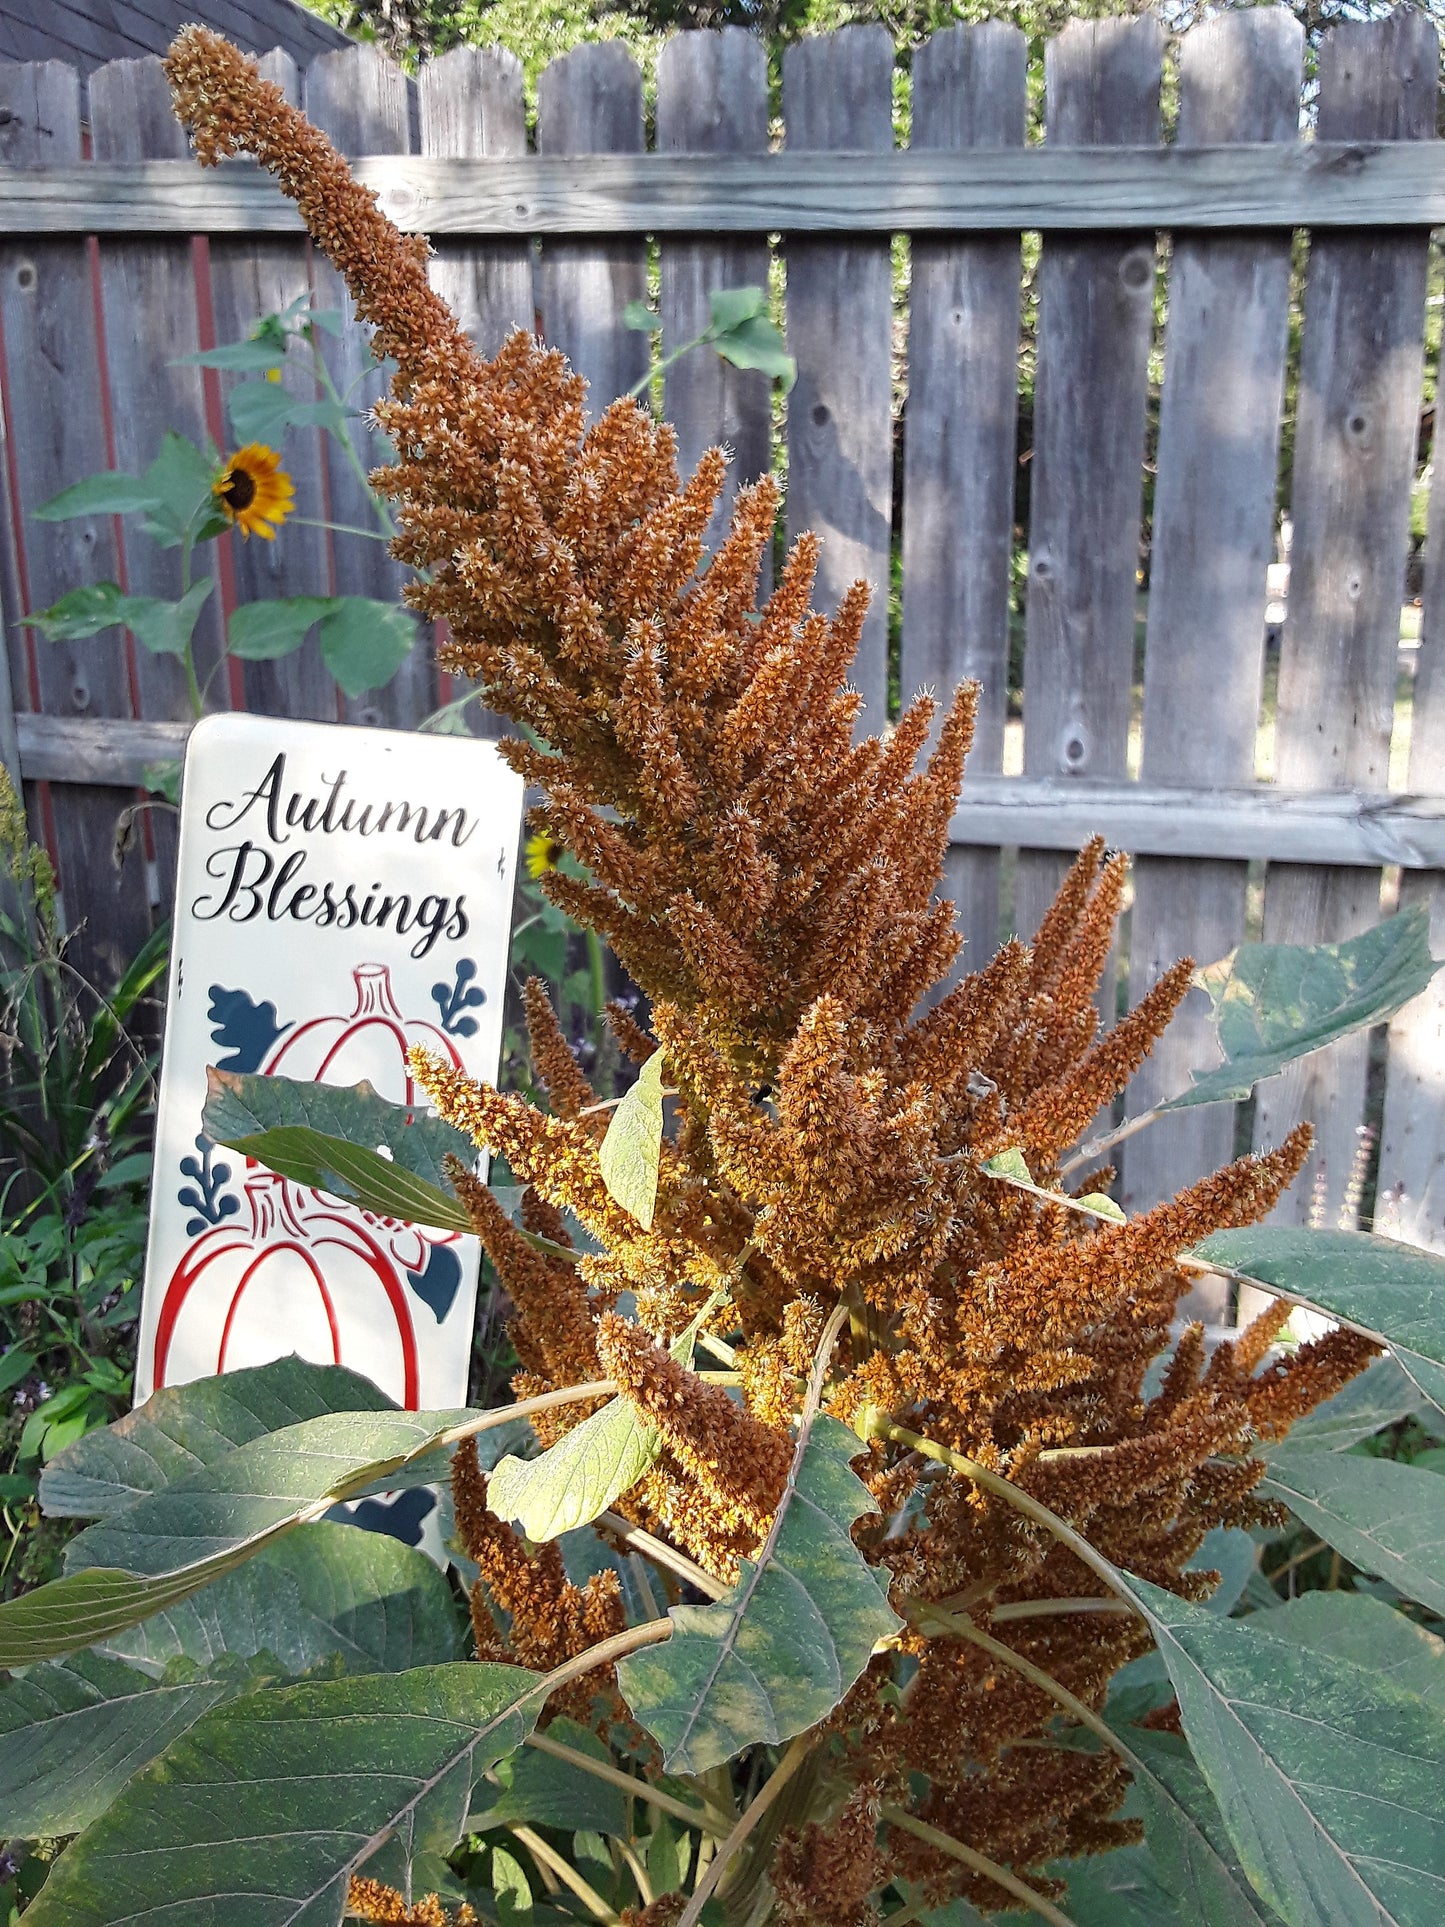 Amaranthus Cruentus Seeds, or Hot Biscuits